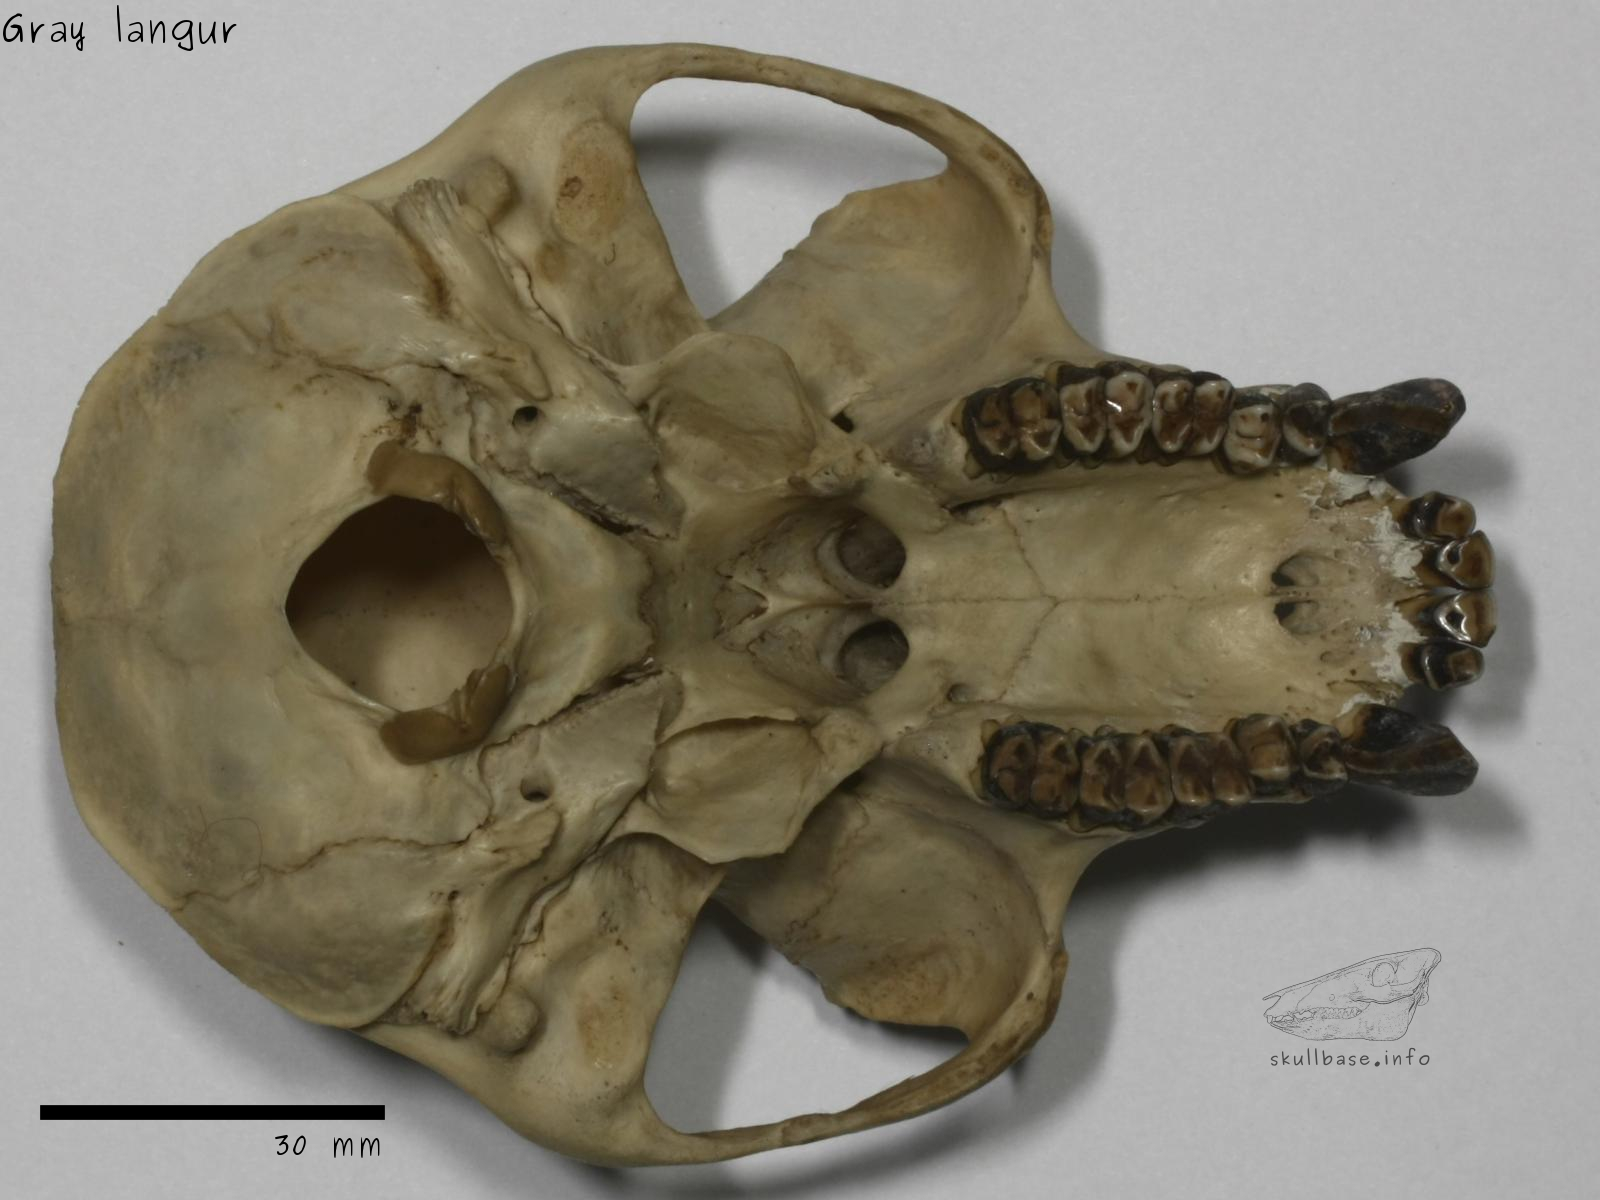 Gray langur (Semnopithecus entellus) skull ventral view